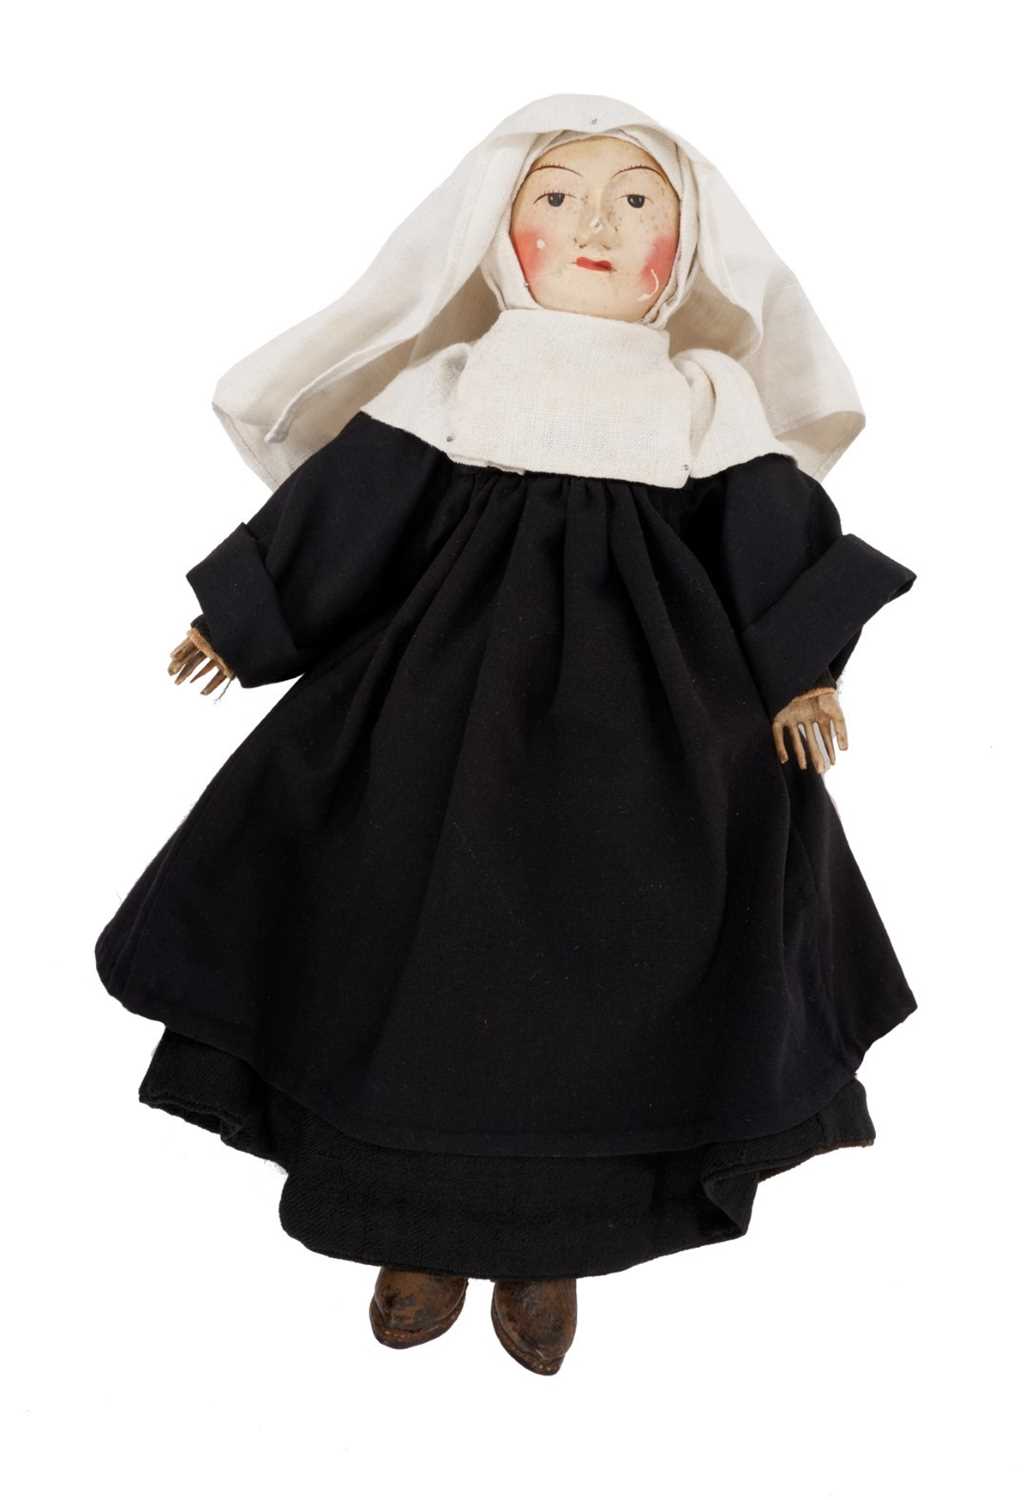 Lot 952 - Very rare Lay Sister or Novice nun doll, probably 18th century